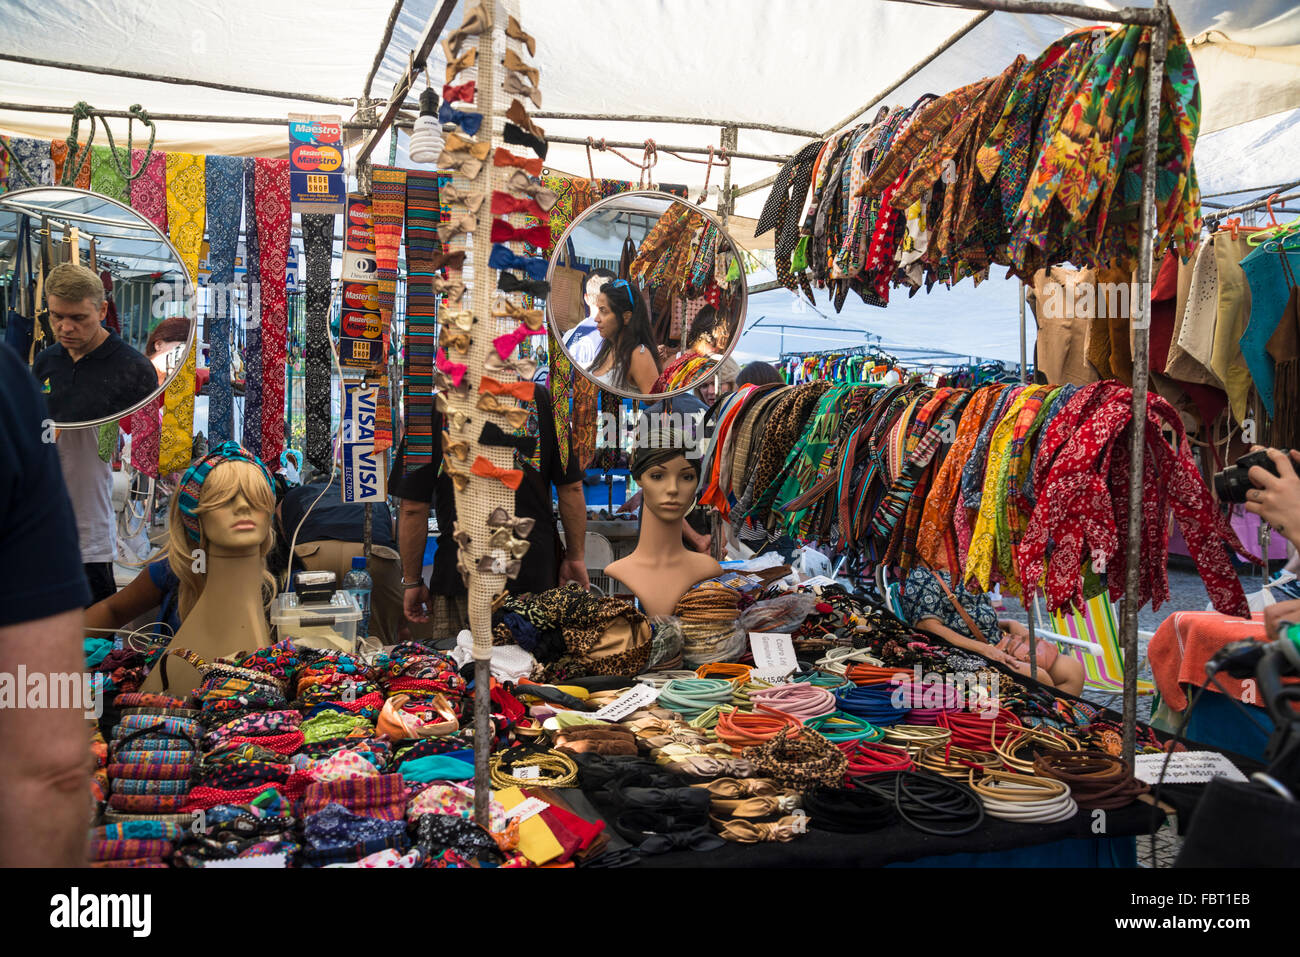 Ipanema Hippie Market, Rio de Janeiro, Brazil Stock Photo - Alamy